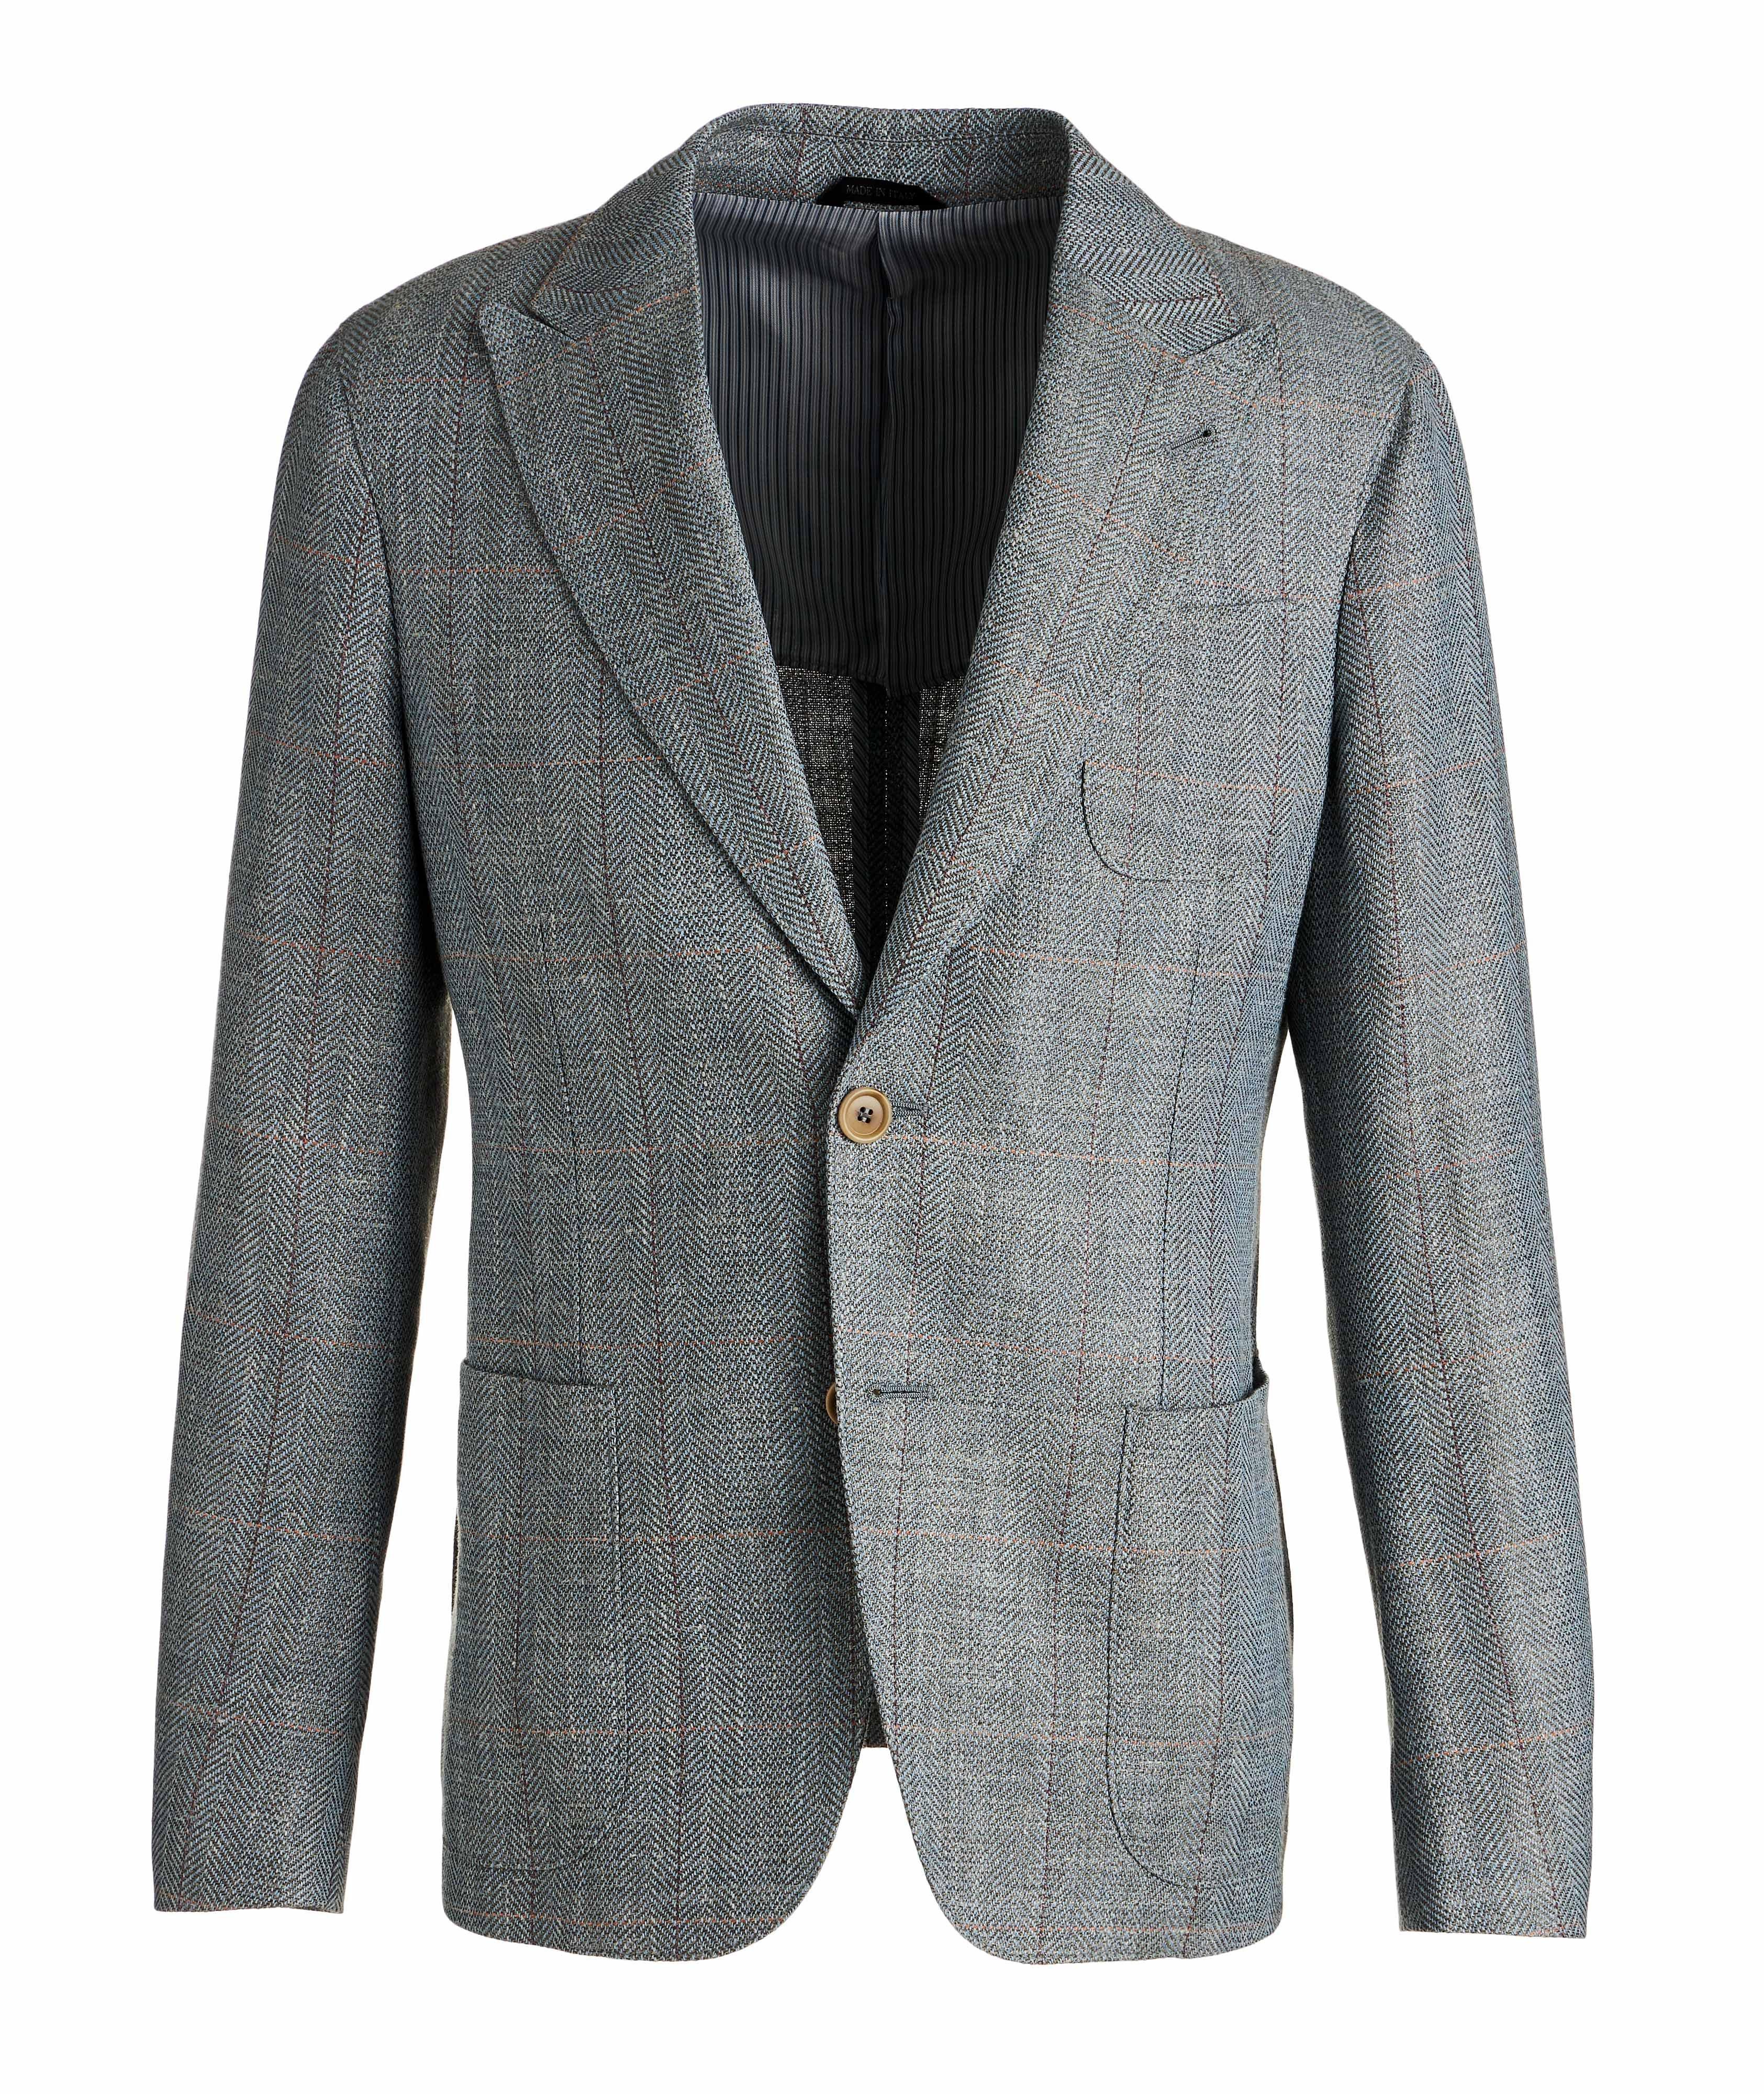 Upton Wool, Linen, and Silk Sports Jacket image 0